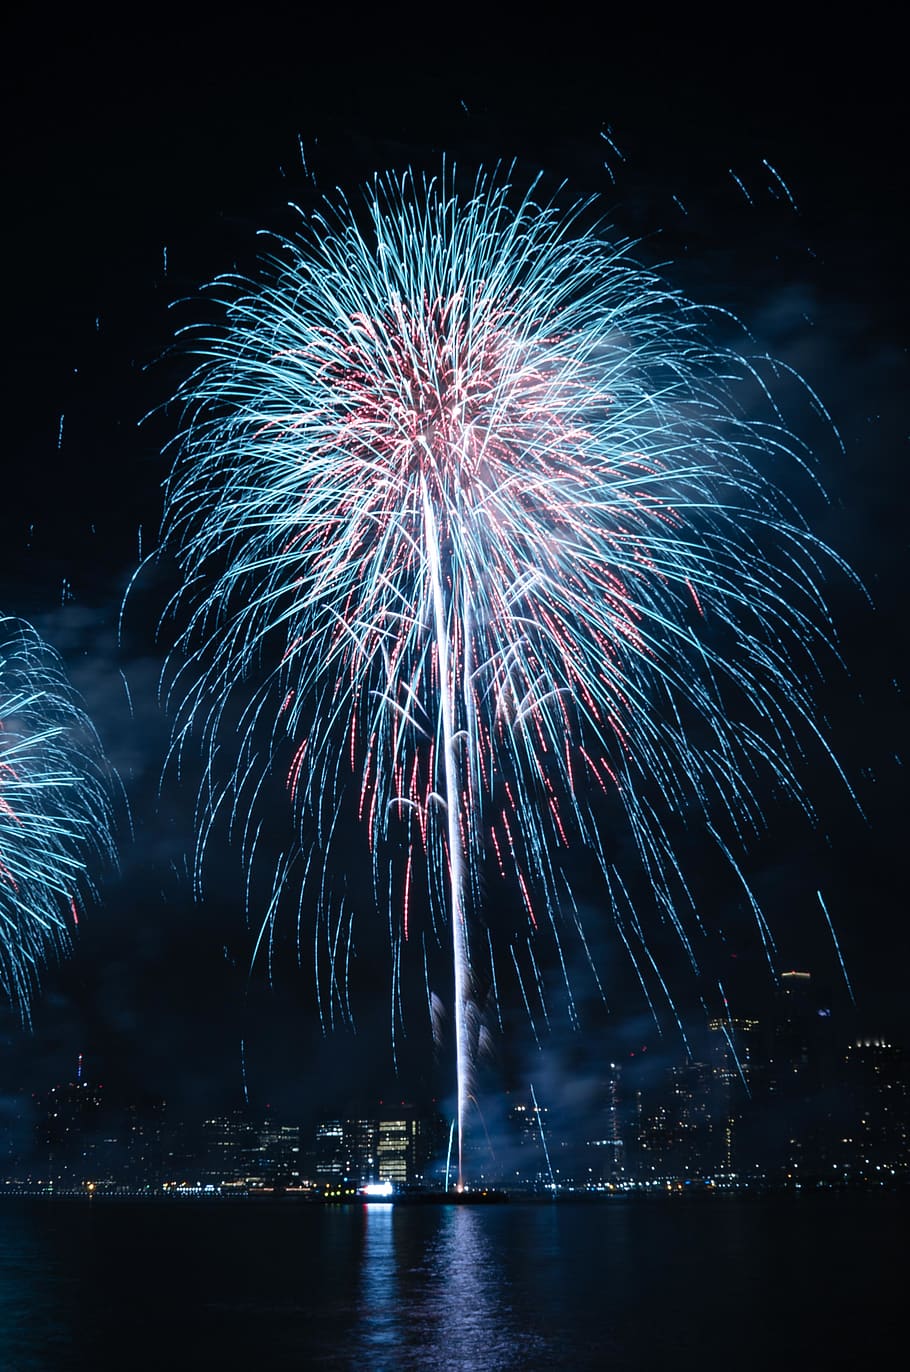 HD wallpaper timelapse photo of fireworks starburst celebration 4th july   Wallpaper Flare